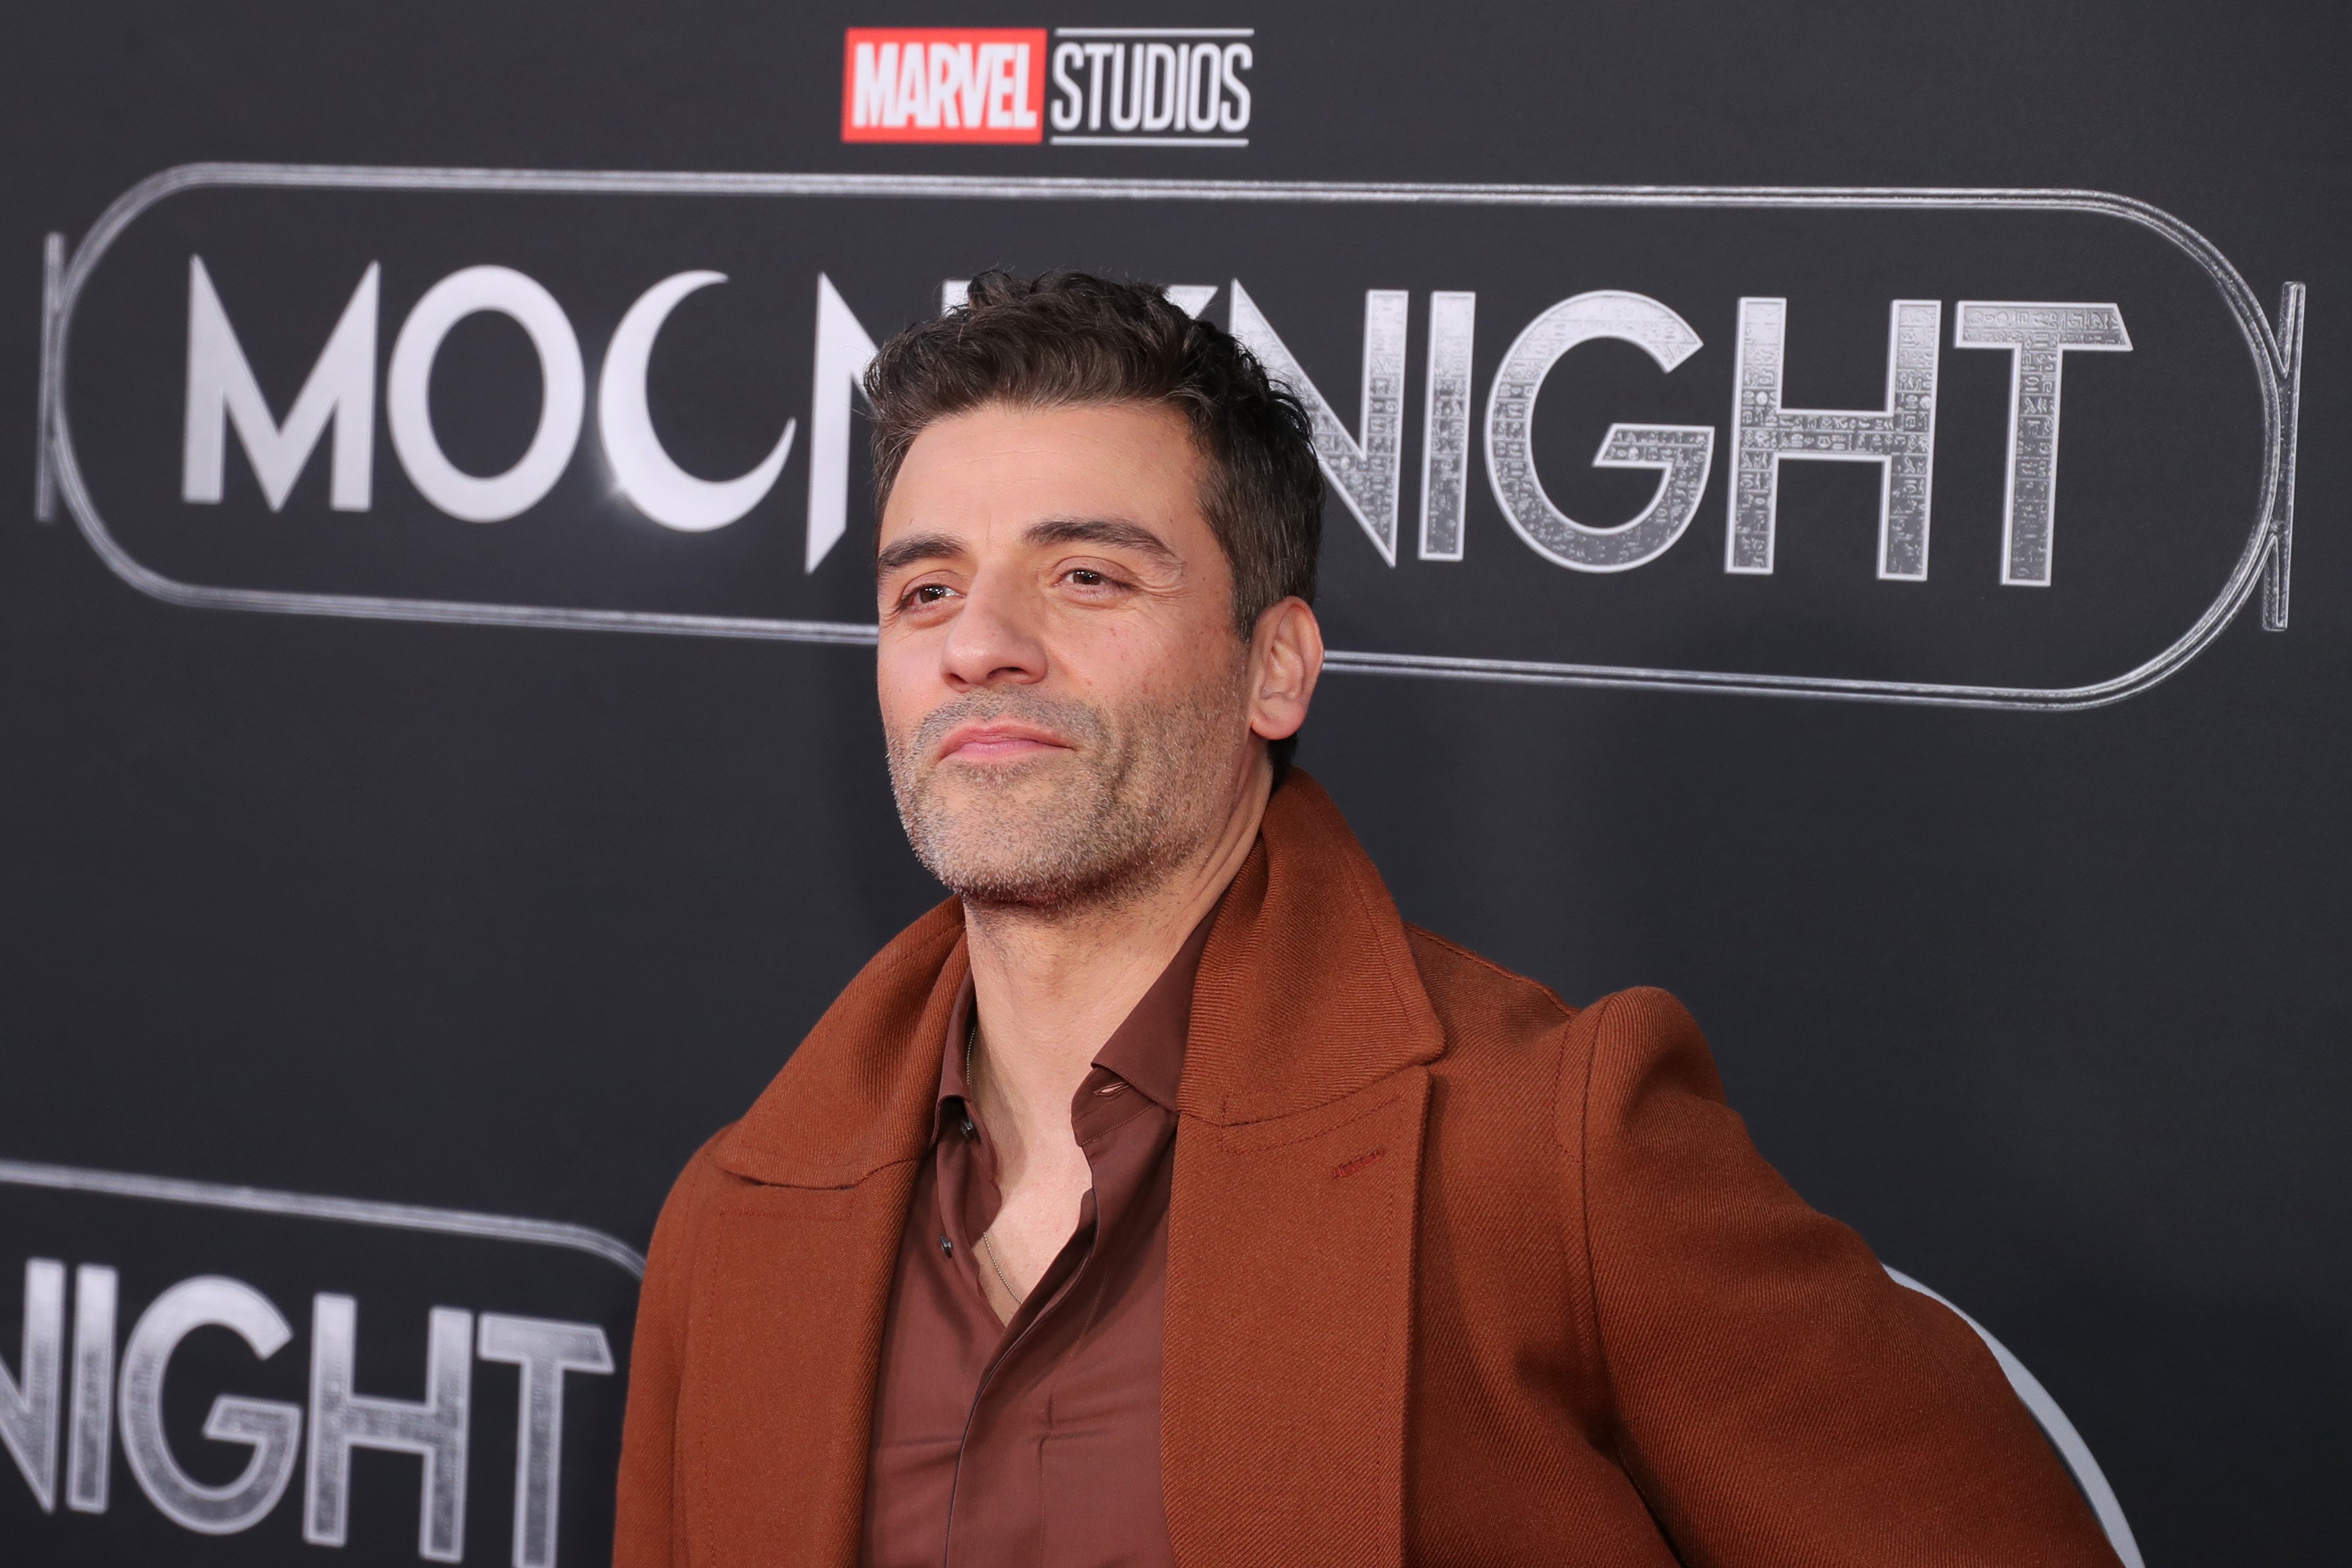 'Moon Knight' star Oscar Isaac wears a light brown coat over a maroon button-up shirt.